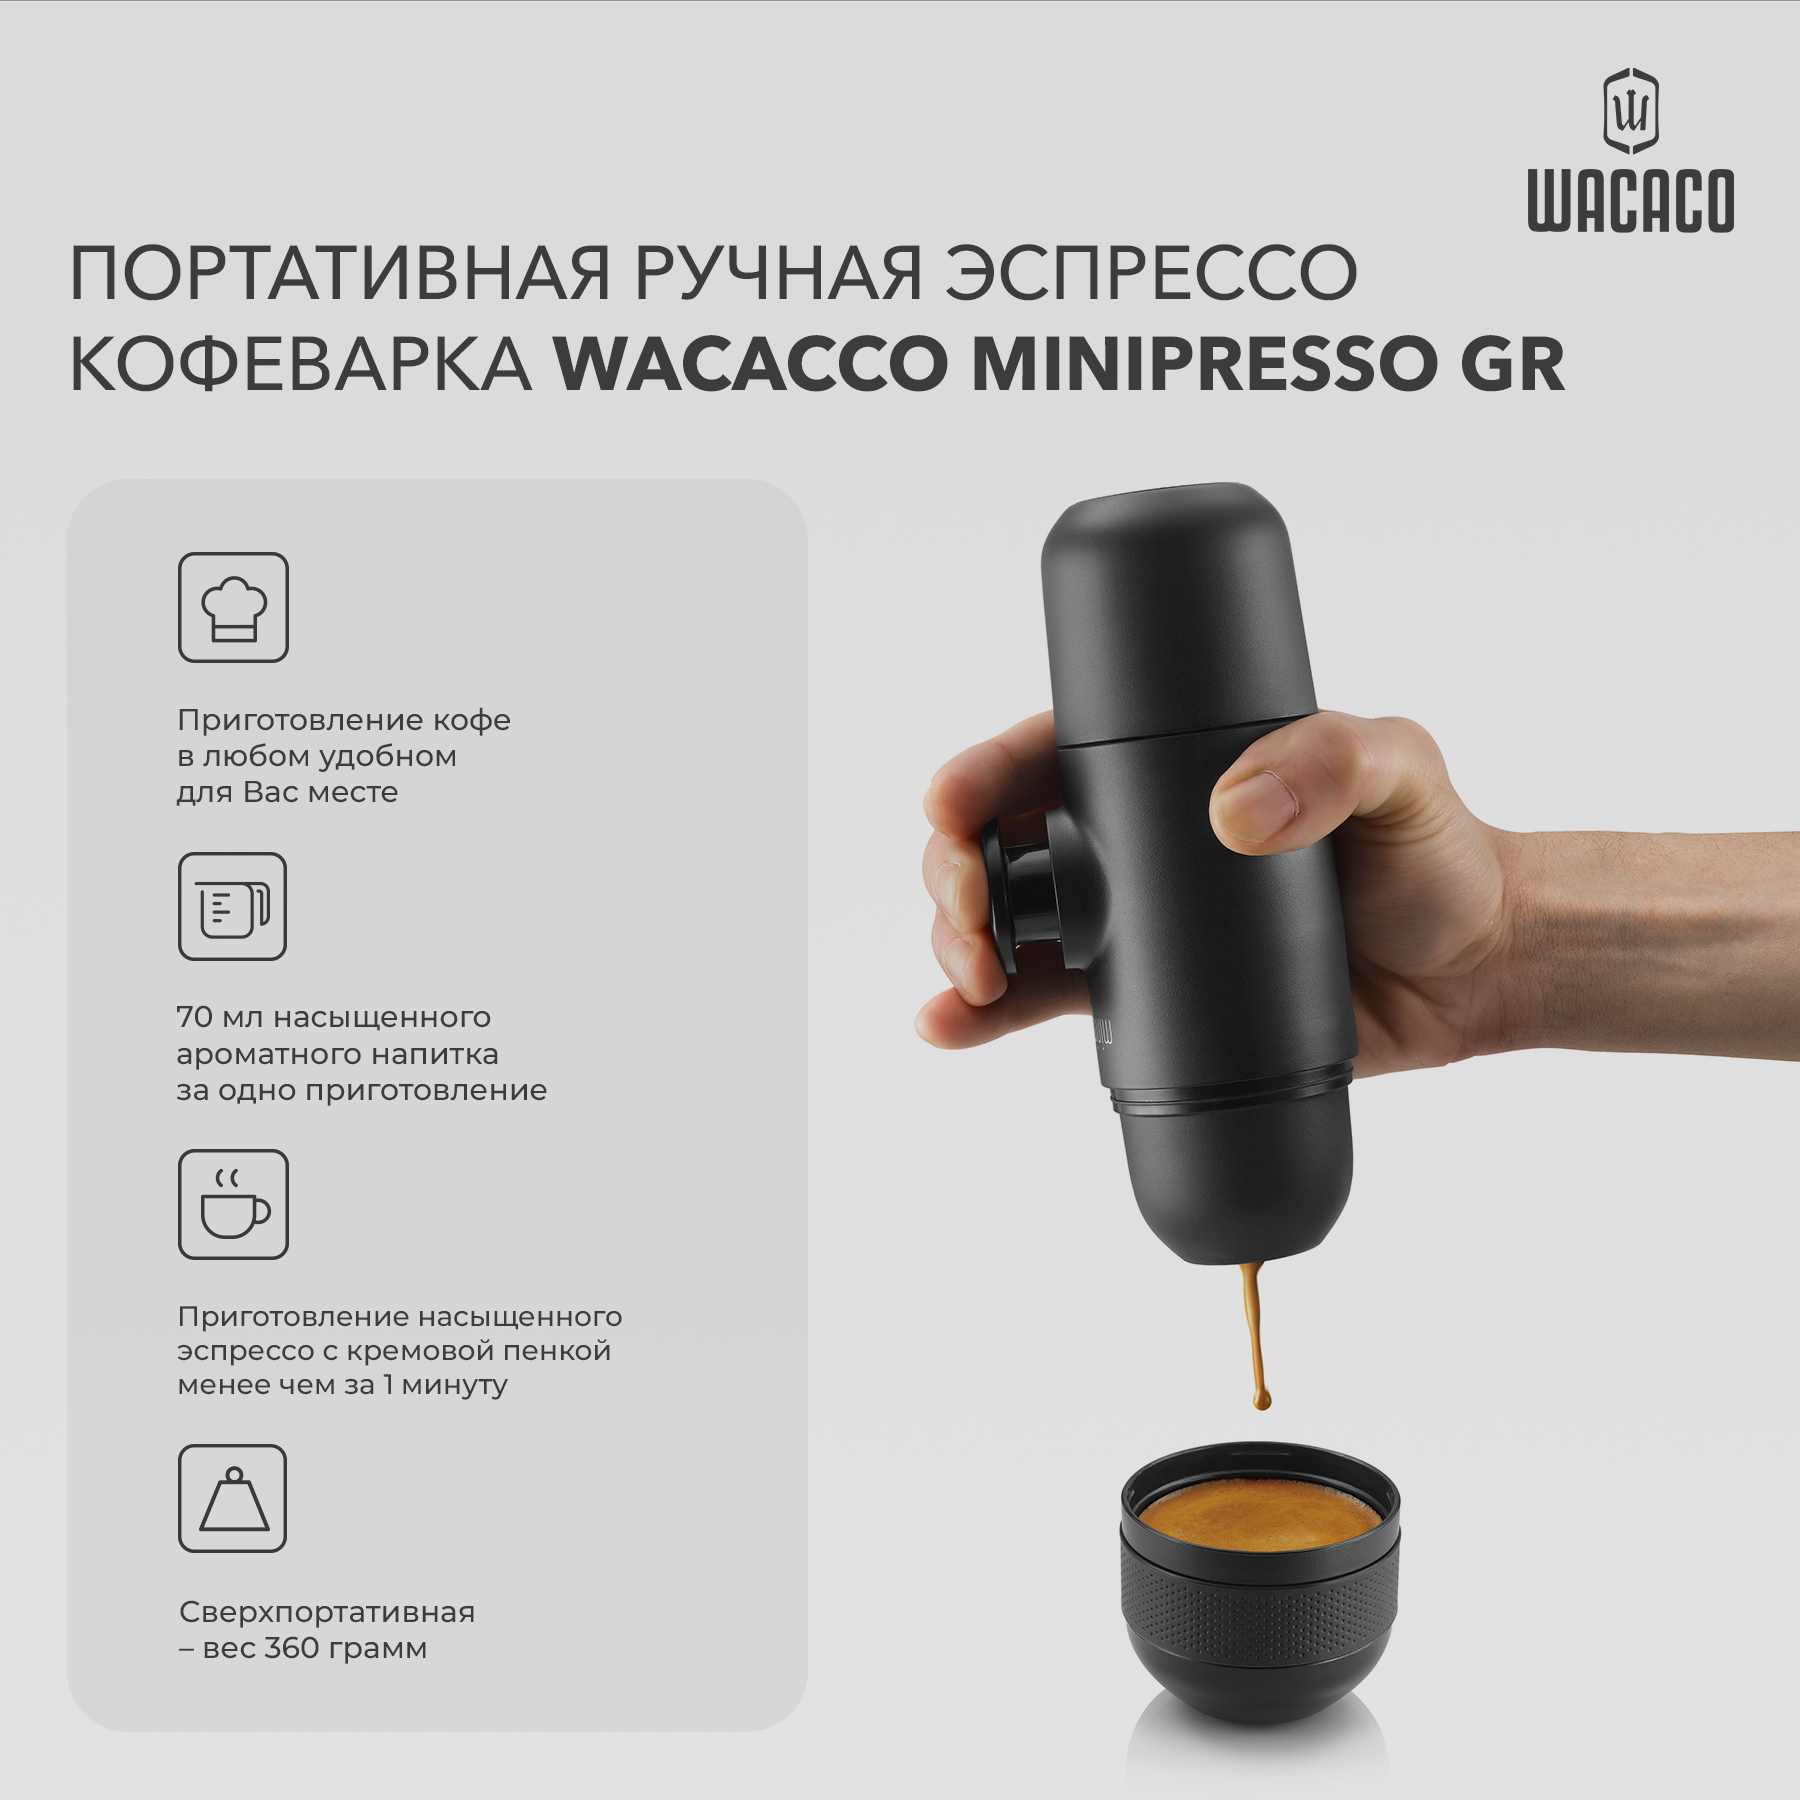 Ручная портативная кофемашина WACACO Minipresso GR